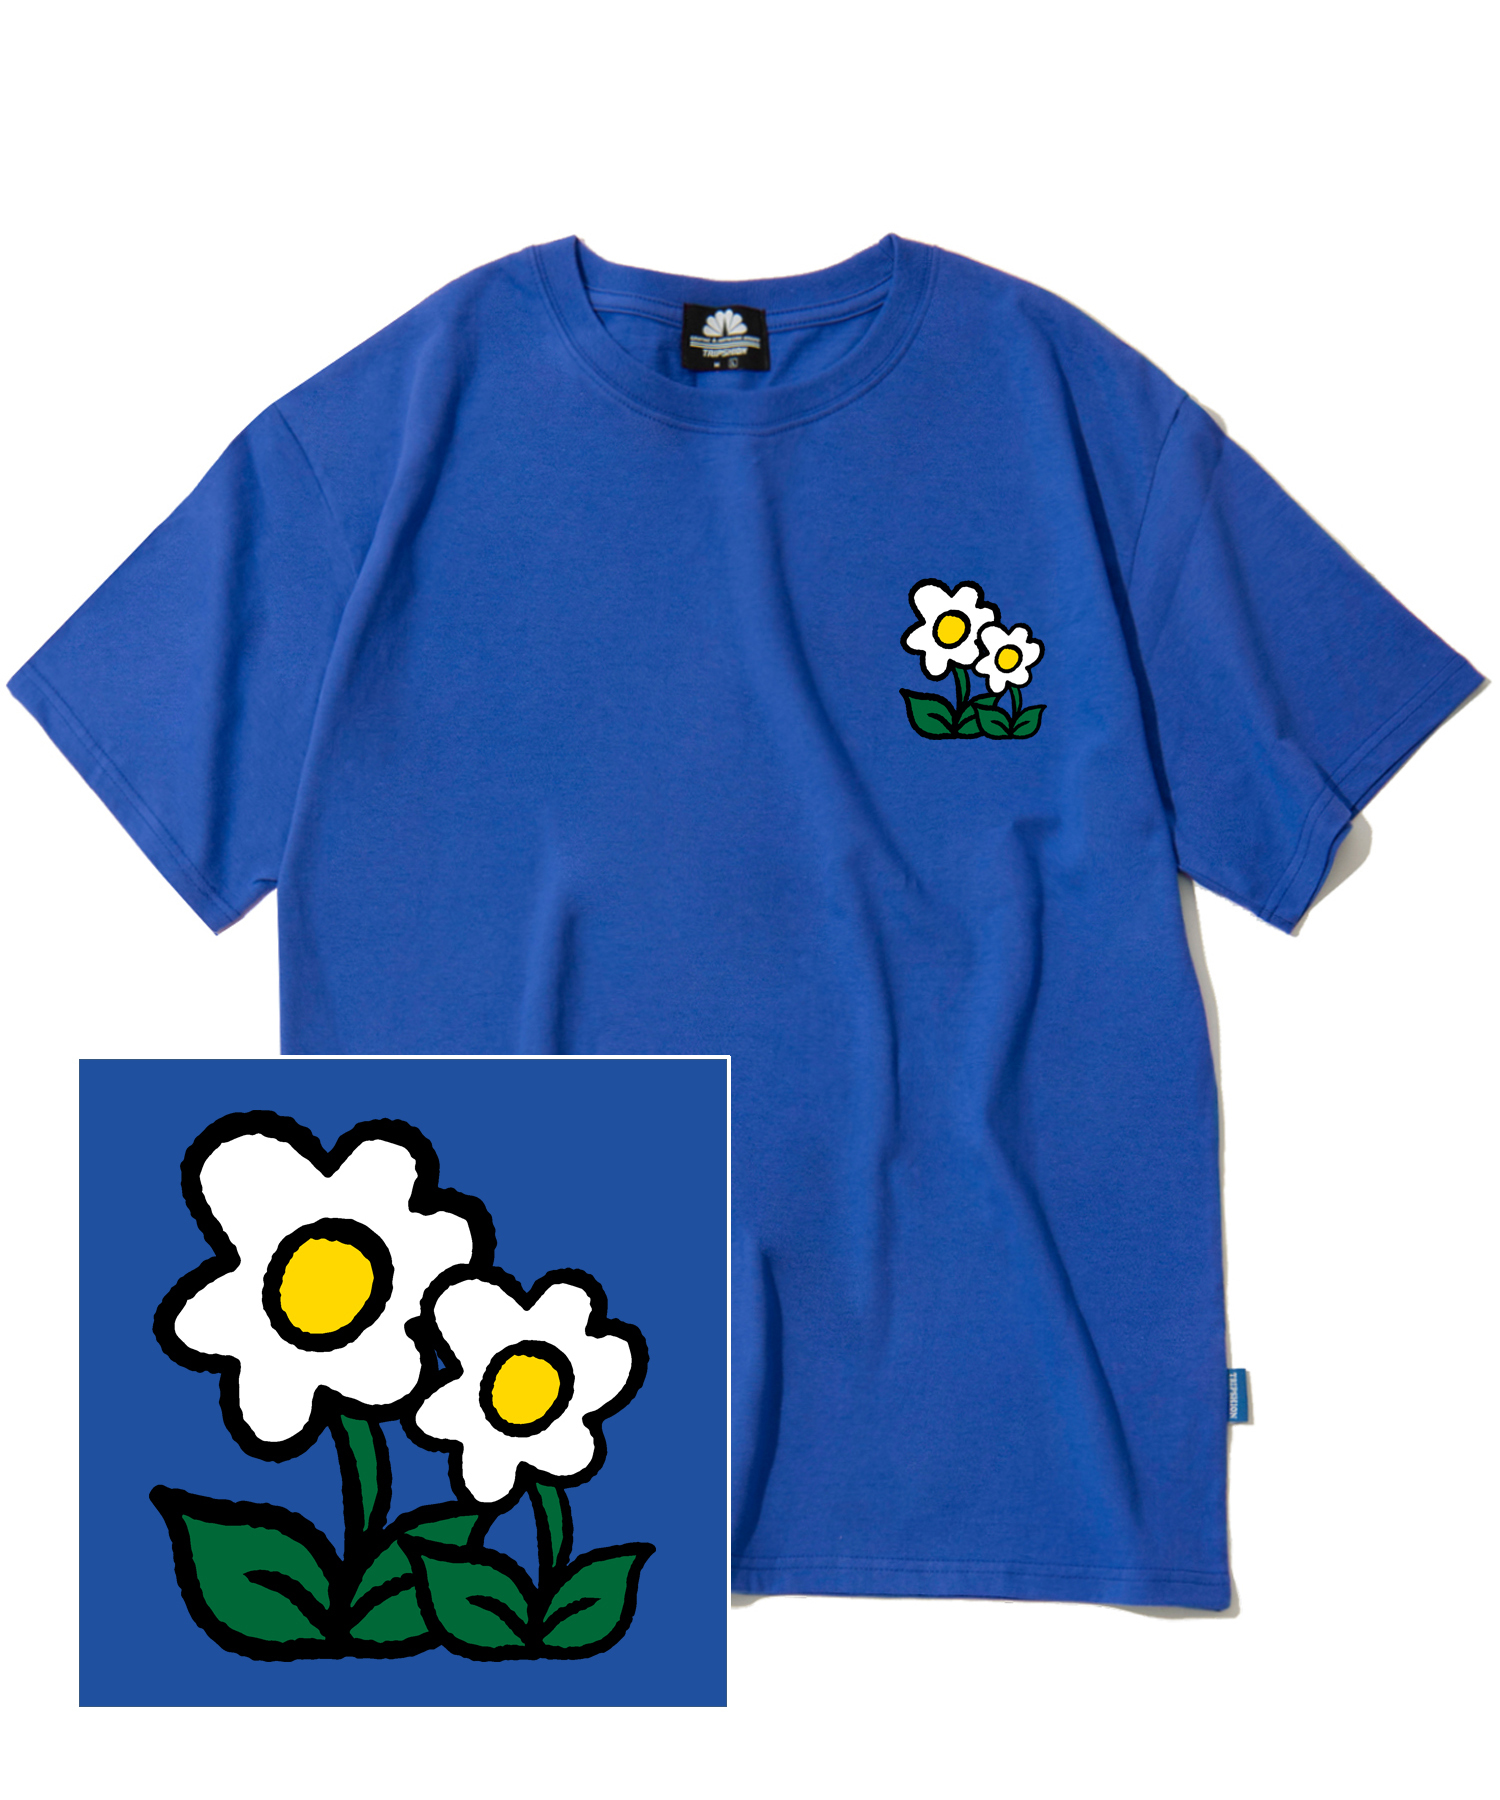 DOUBLE FLOWER LOGO T-SHIRTS - BLUE